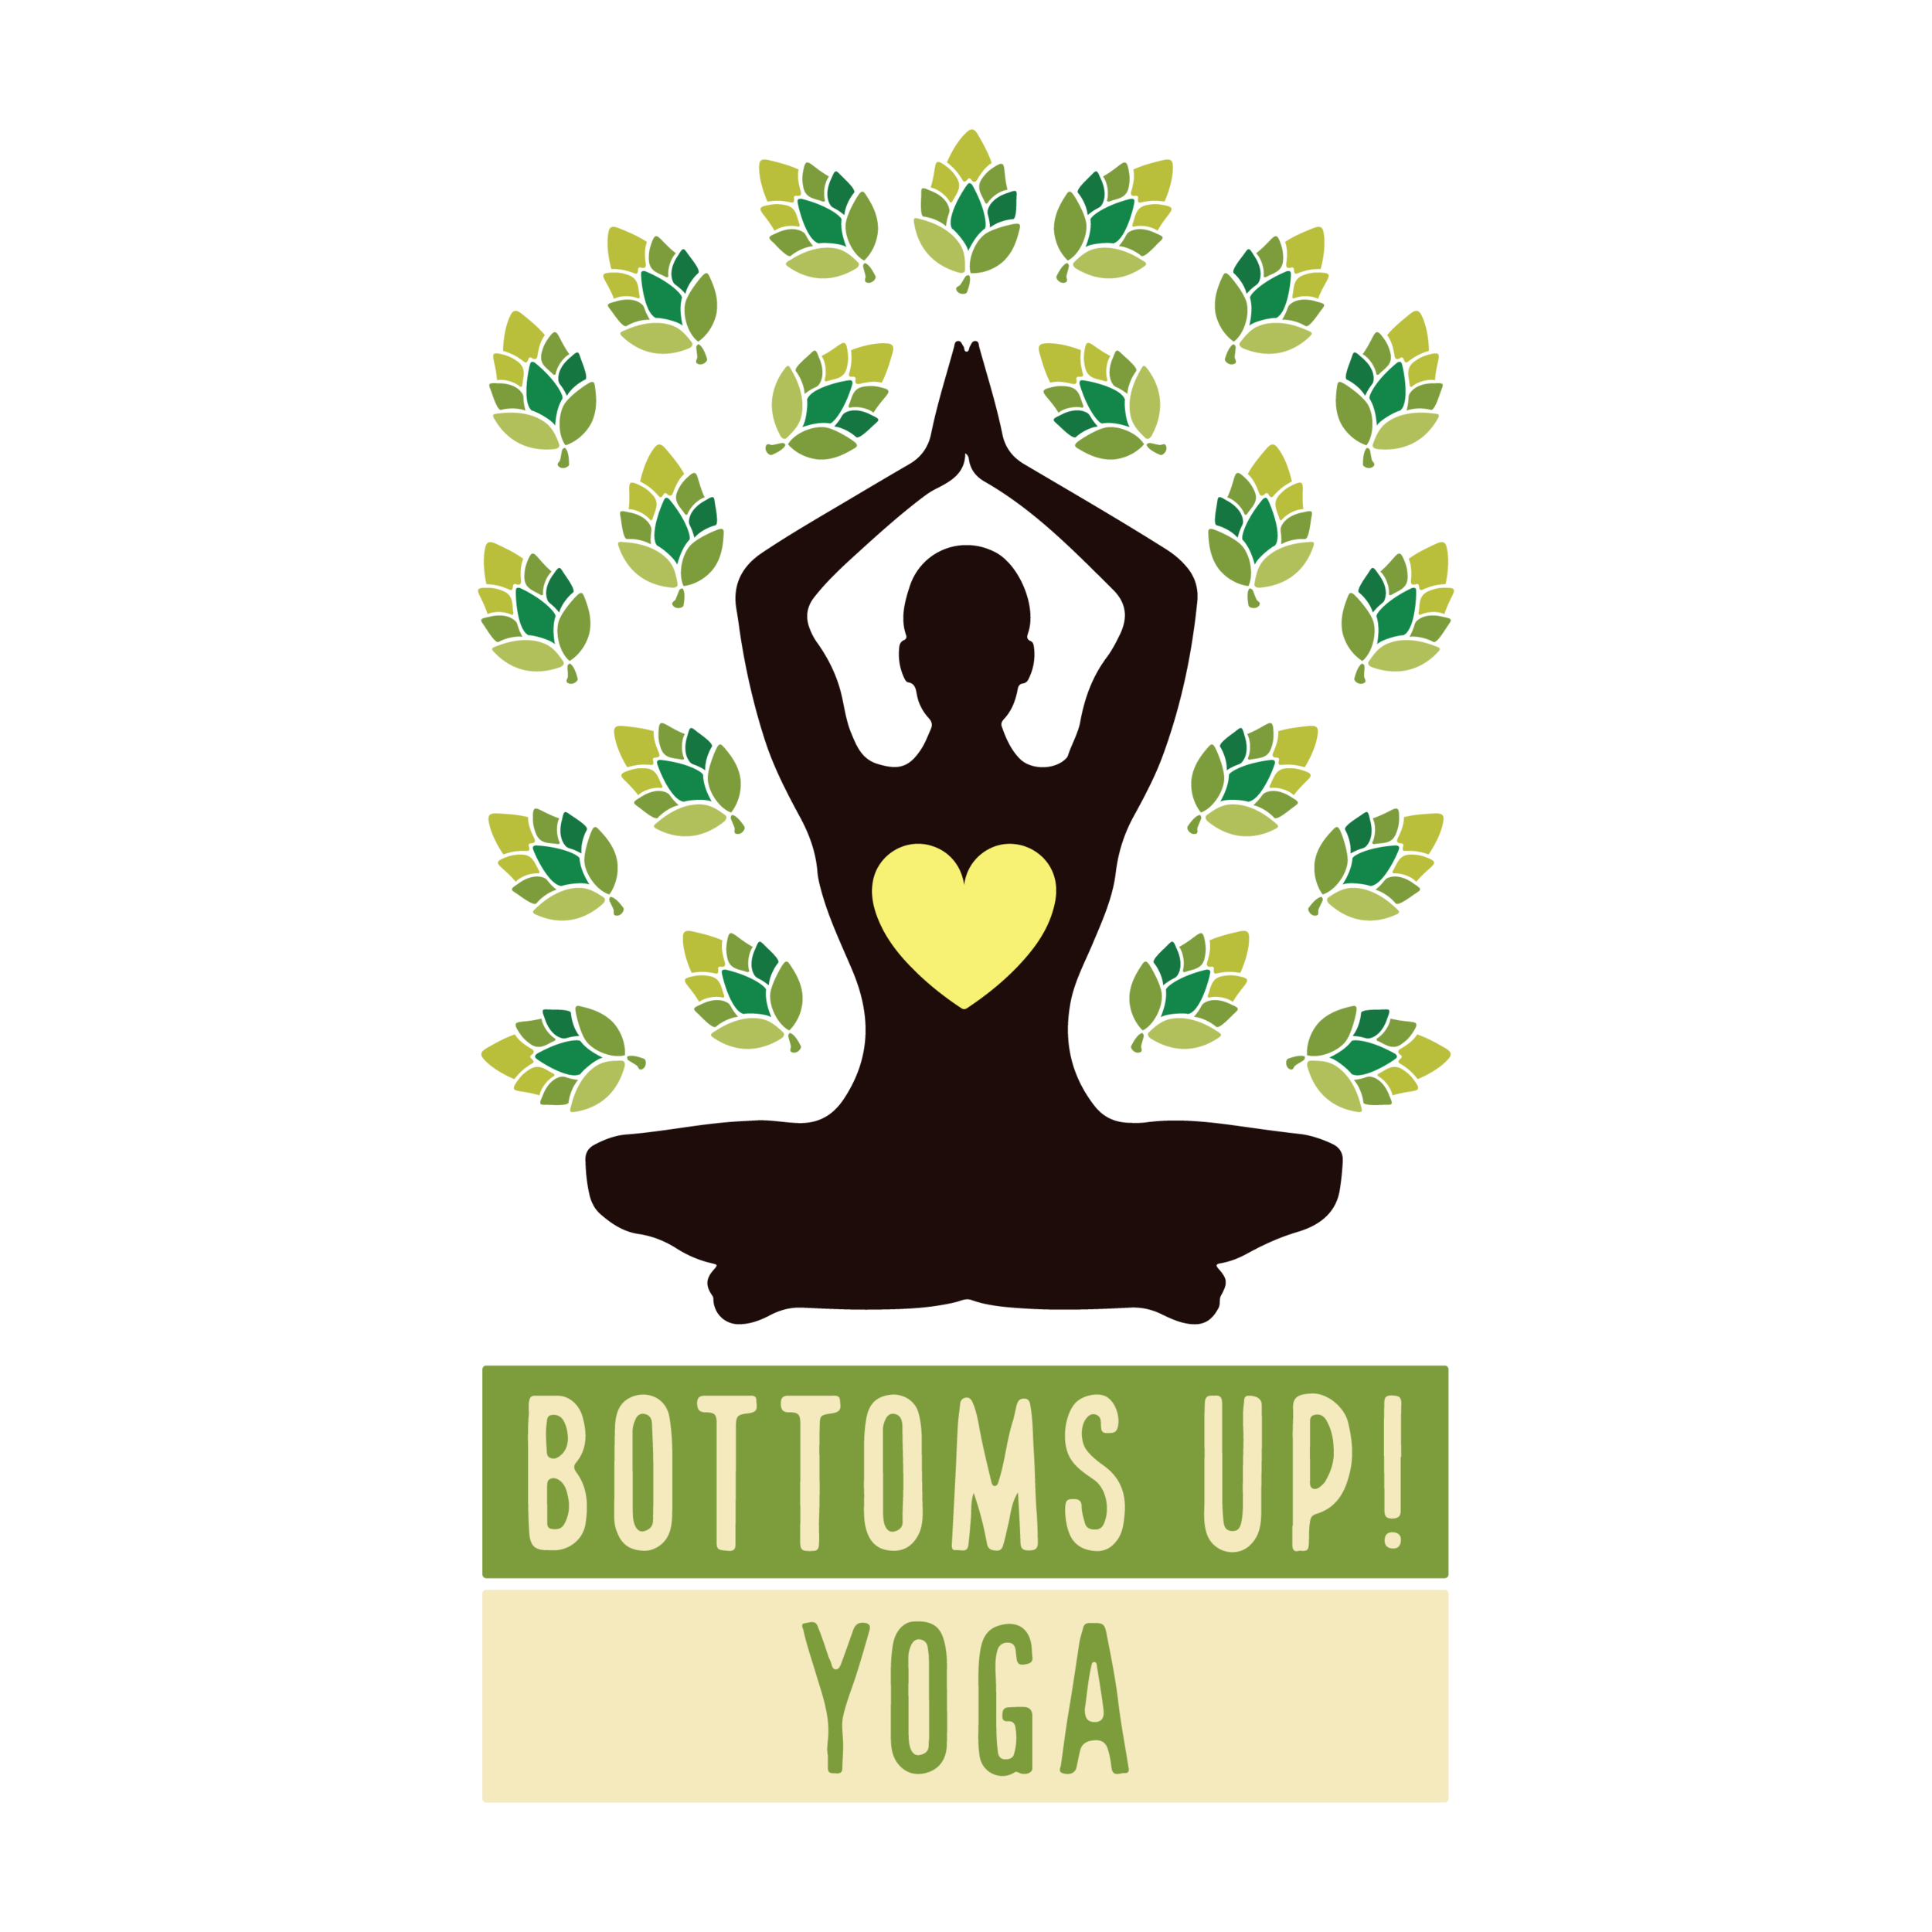 Bottoms Up! Yoga